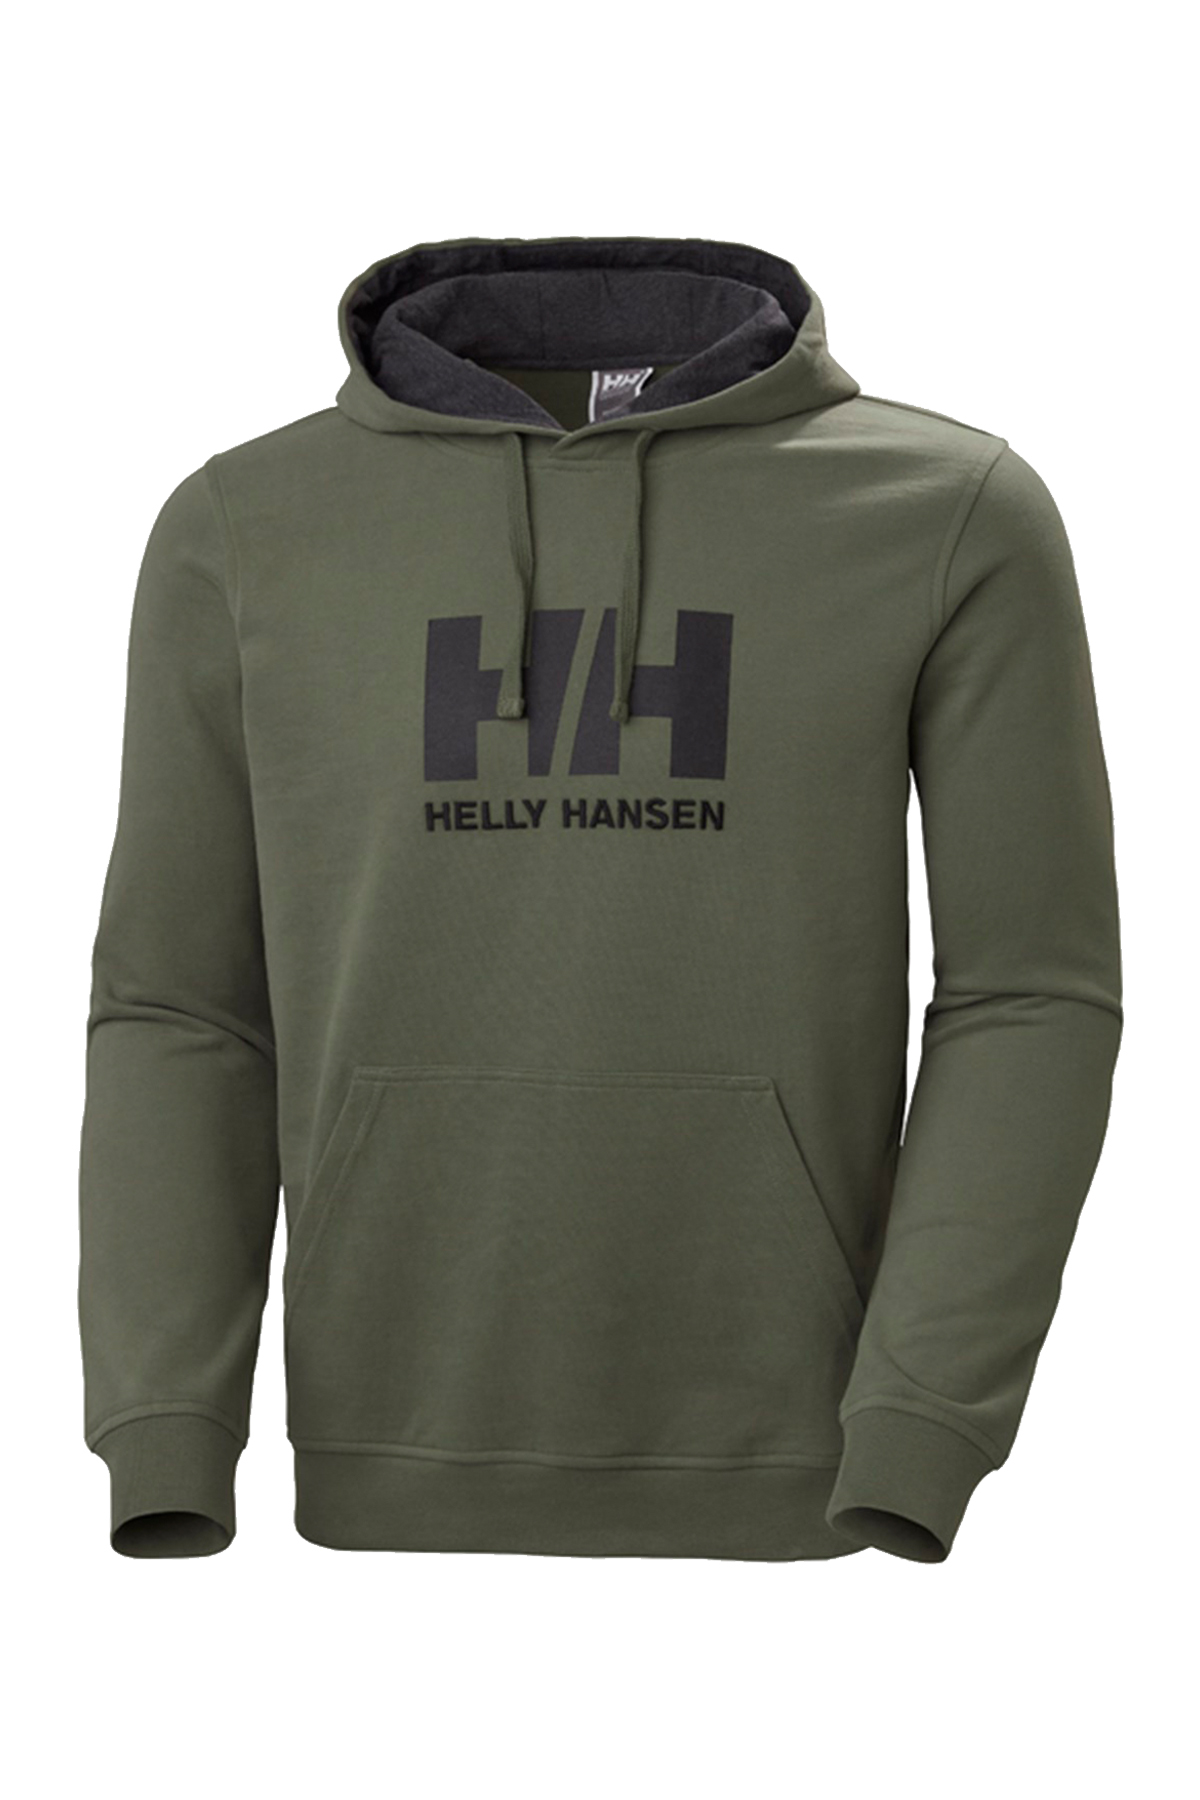 Helly Hansen HHA.33977 - Logo Hoodie Yeşil Sweat Shirt